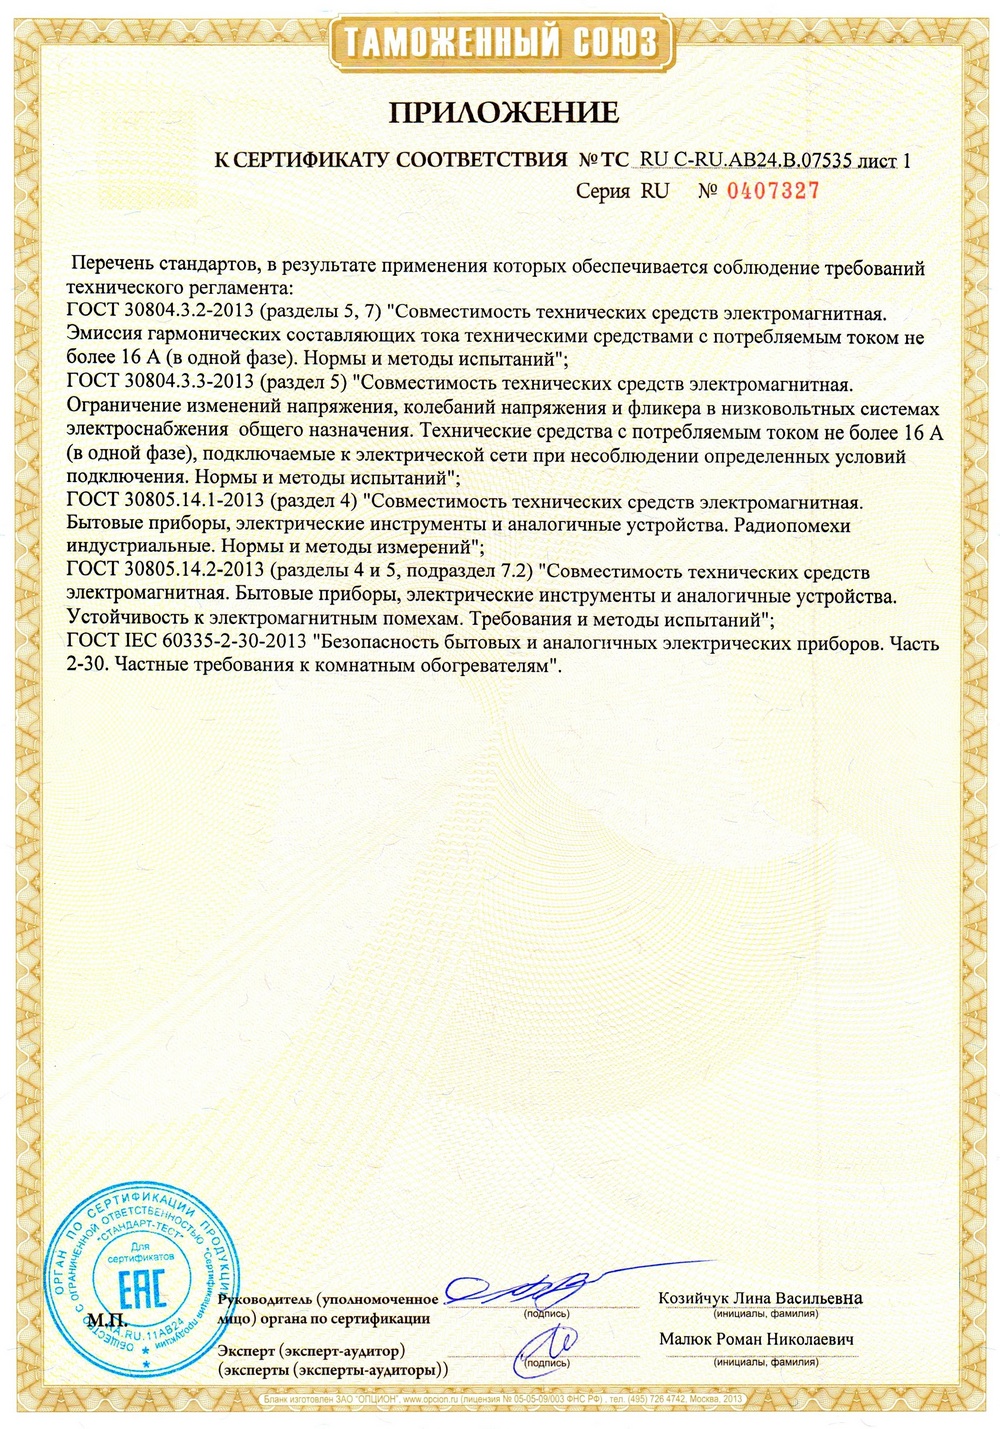 Таможенная декларация на обогреватели Алмак с терморегулятором